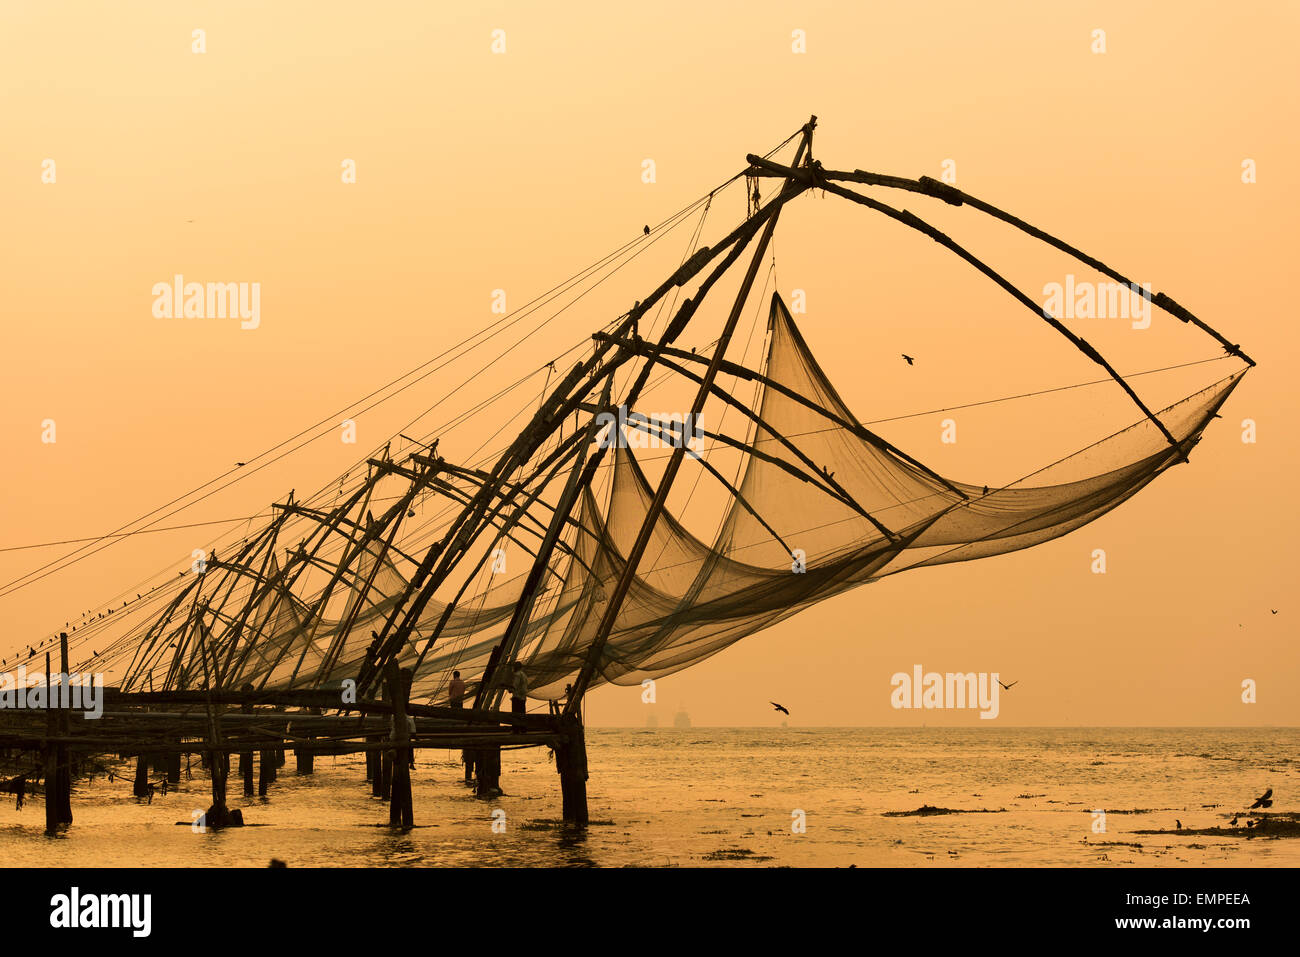 Chinesische Fischernetze, Sonnenuntergang, Arabisches Meer Küste, Fort Kochi, Kerala, Südindien, Indien Stockfoto